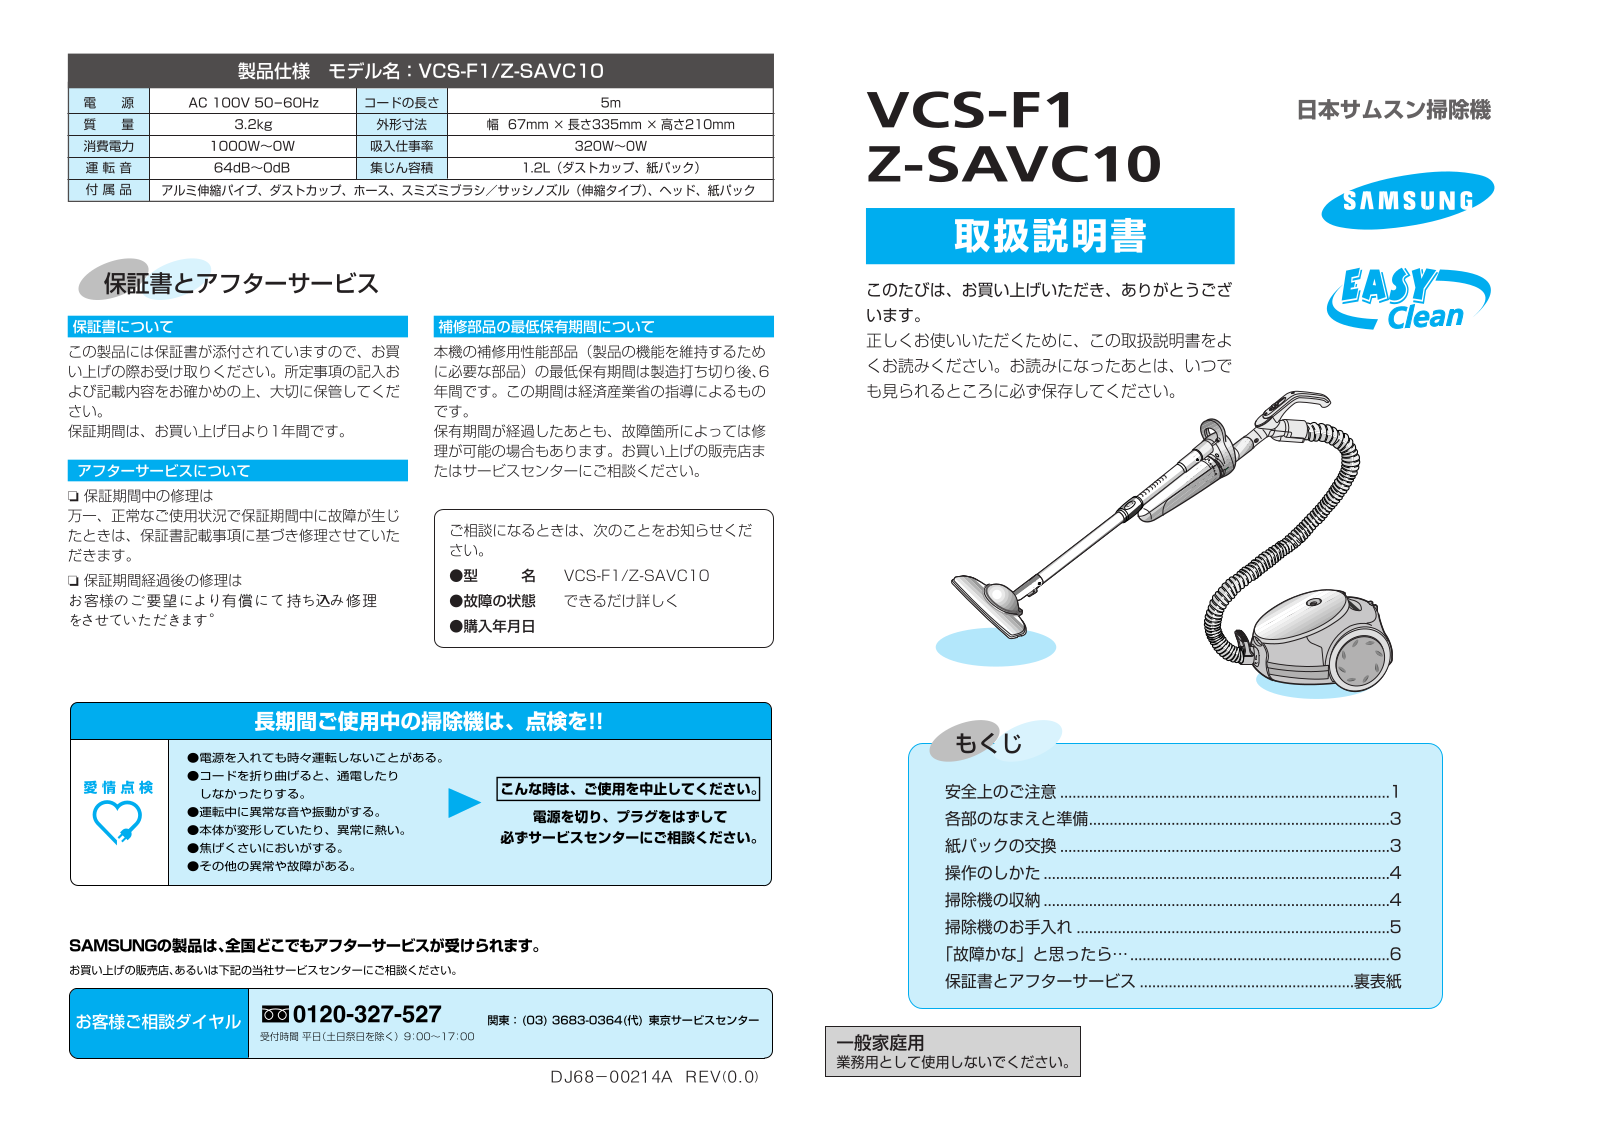 Samsung Z-SAVC10, VCS-F1 User Manual